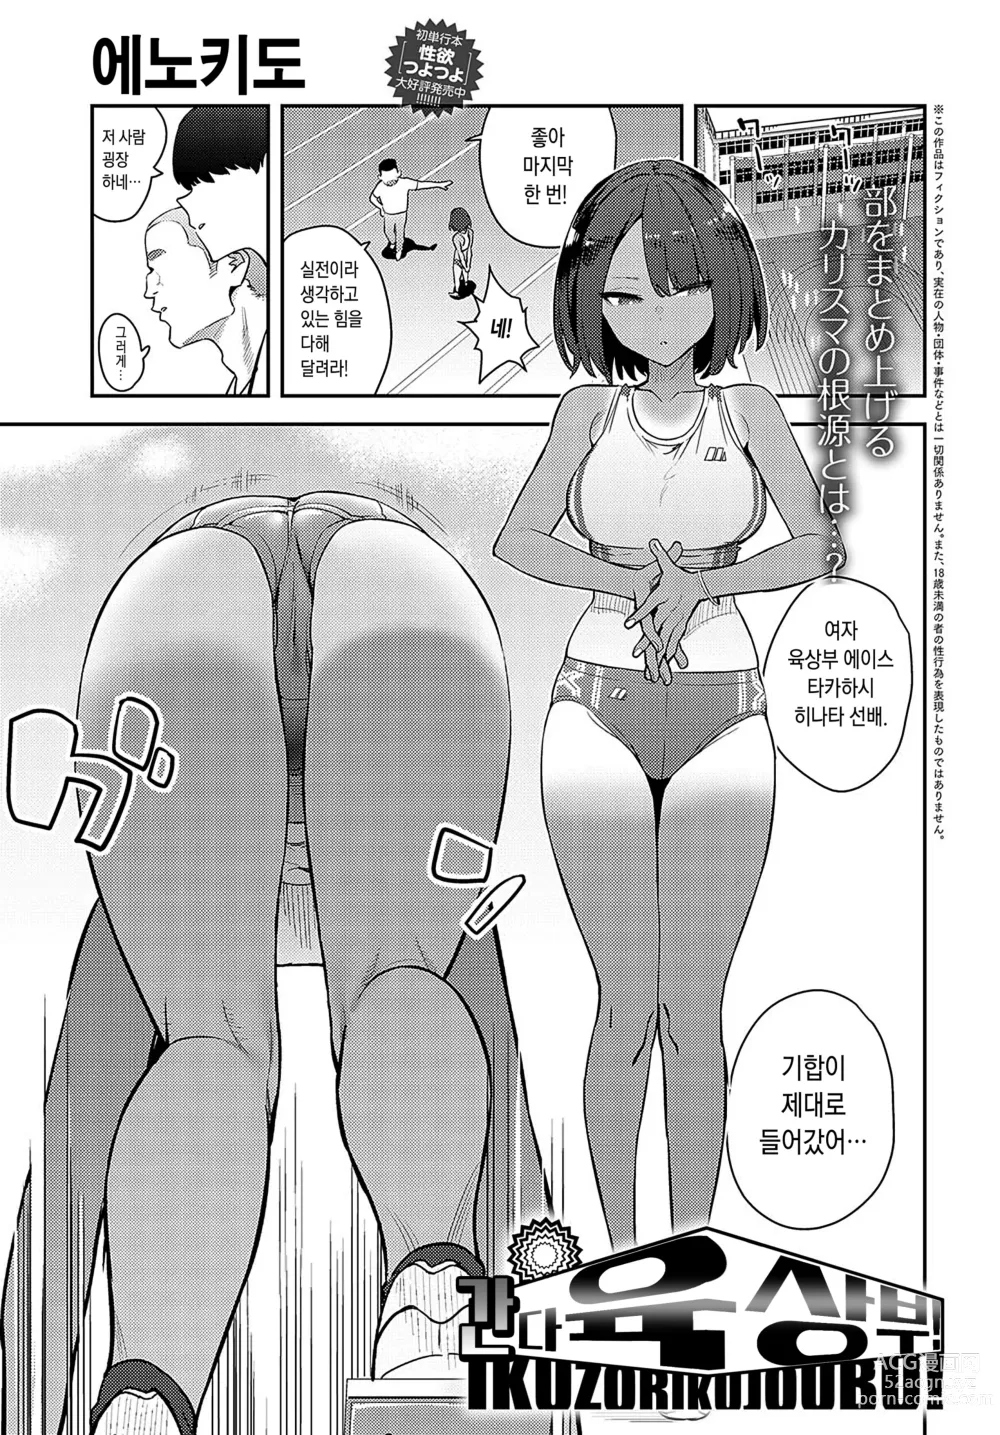 Page 1 of manga 간다 육상부!